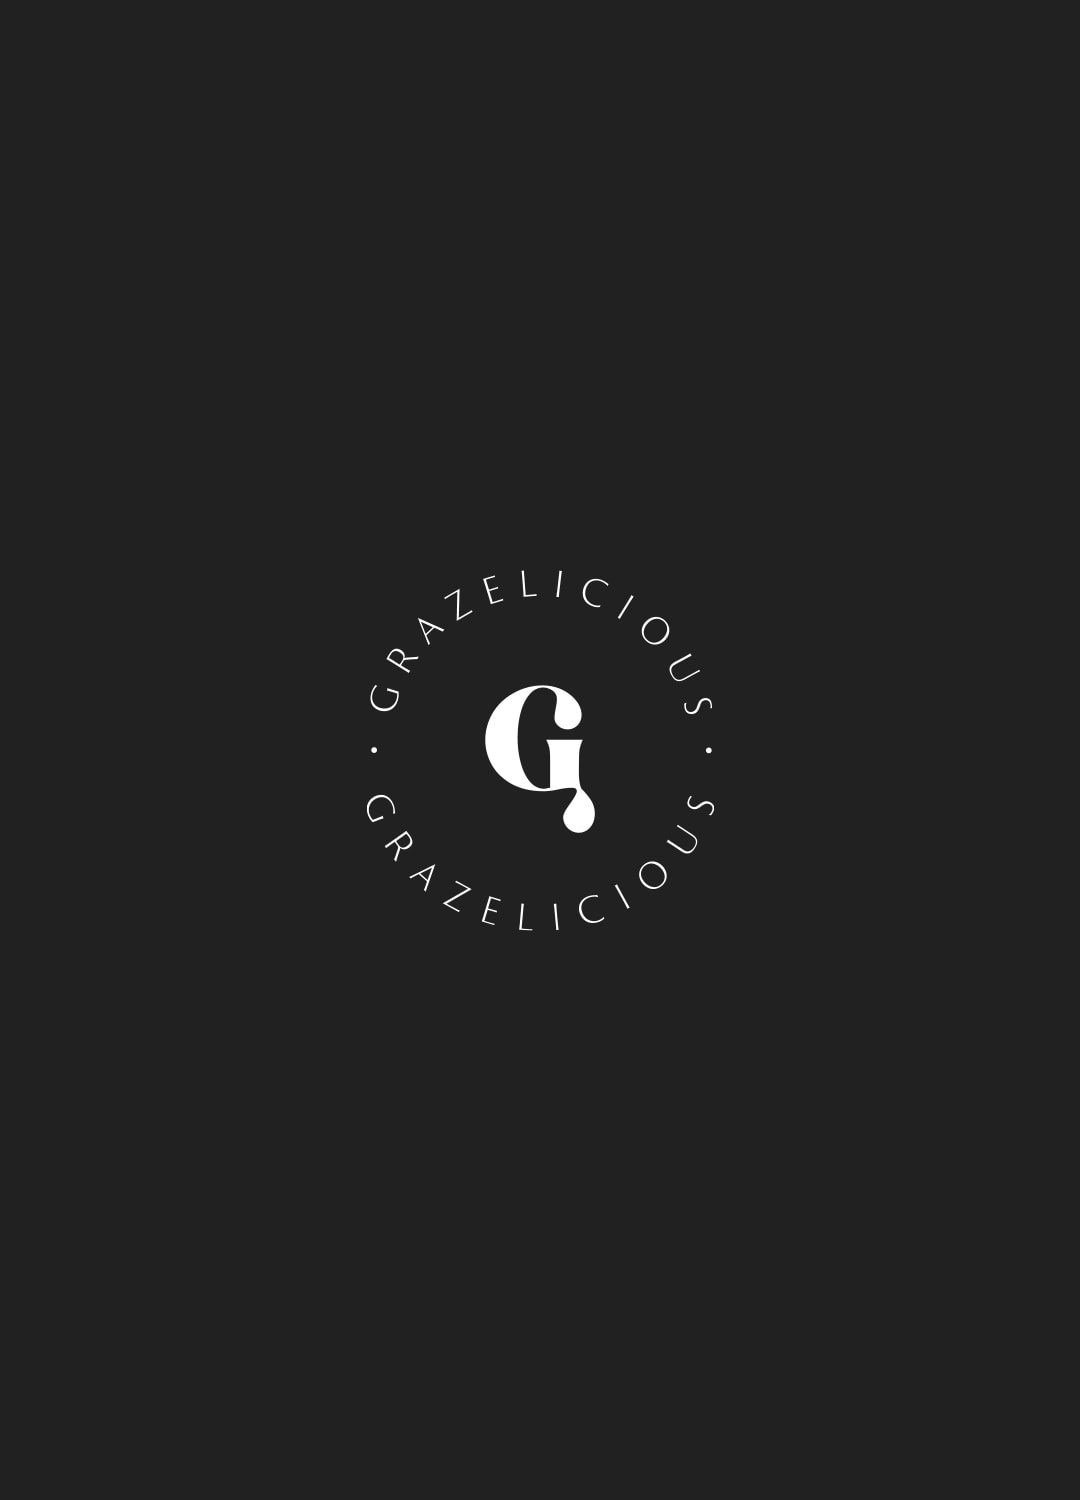 Grazelicious logo design